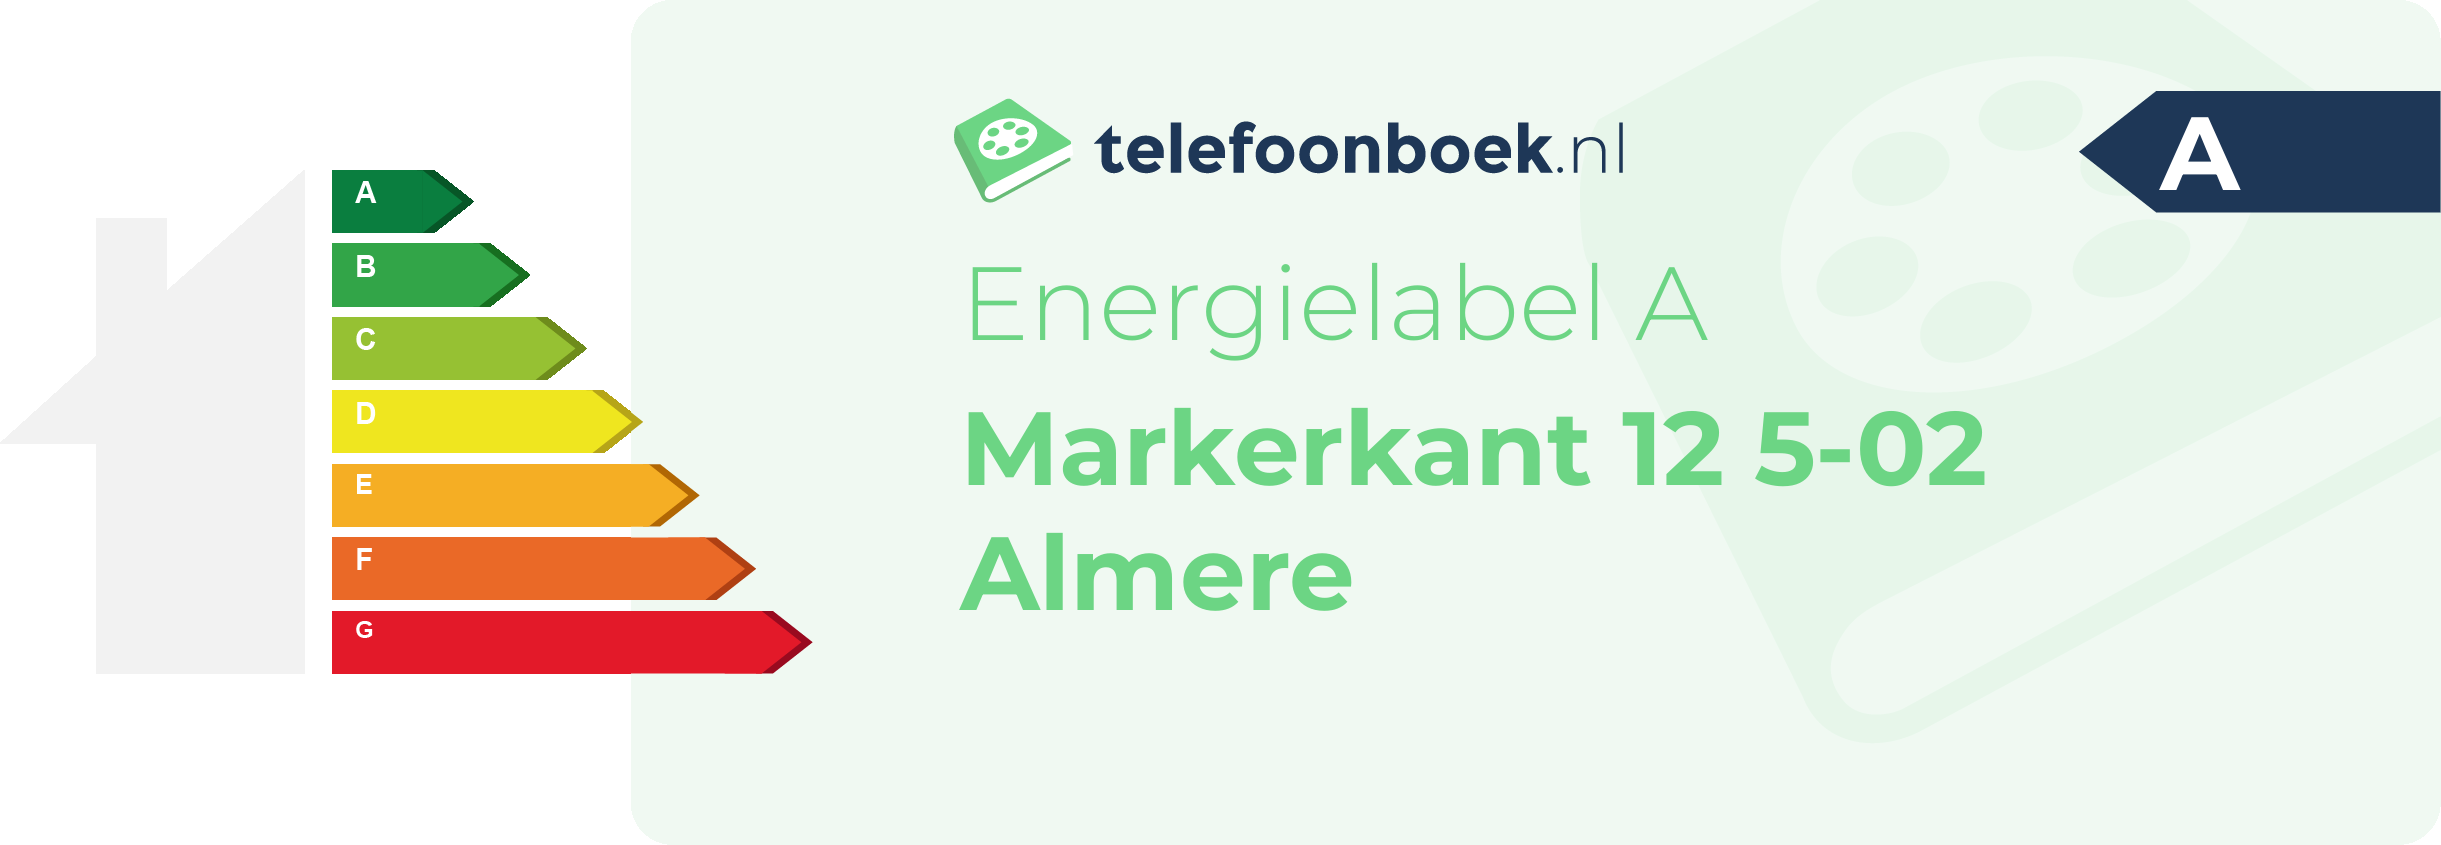 Energielabel Markerkant 12 5-02 Almere